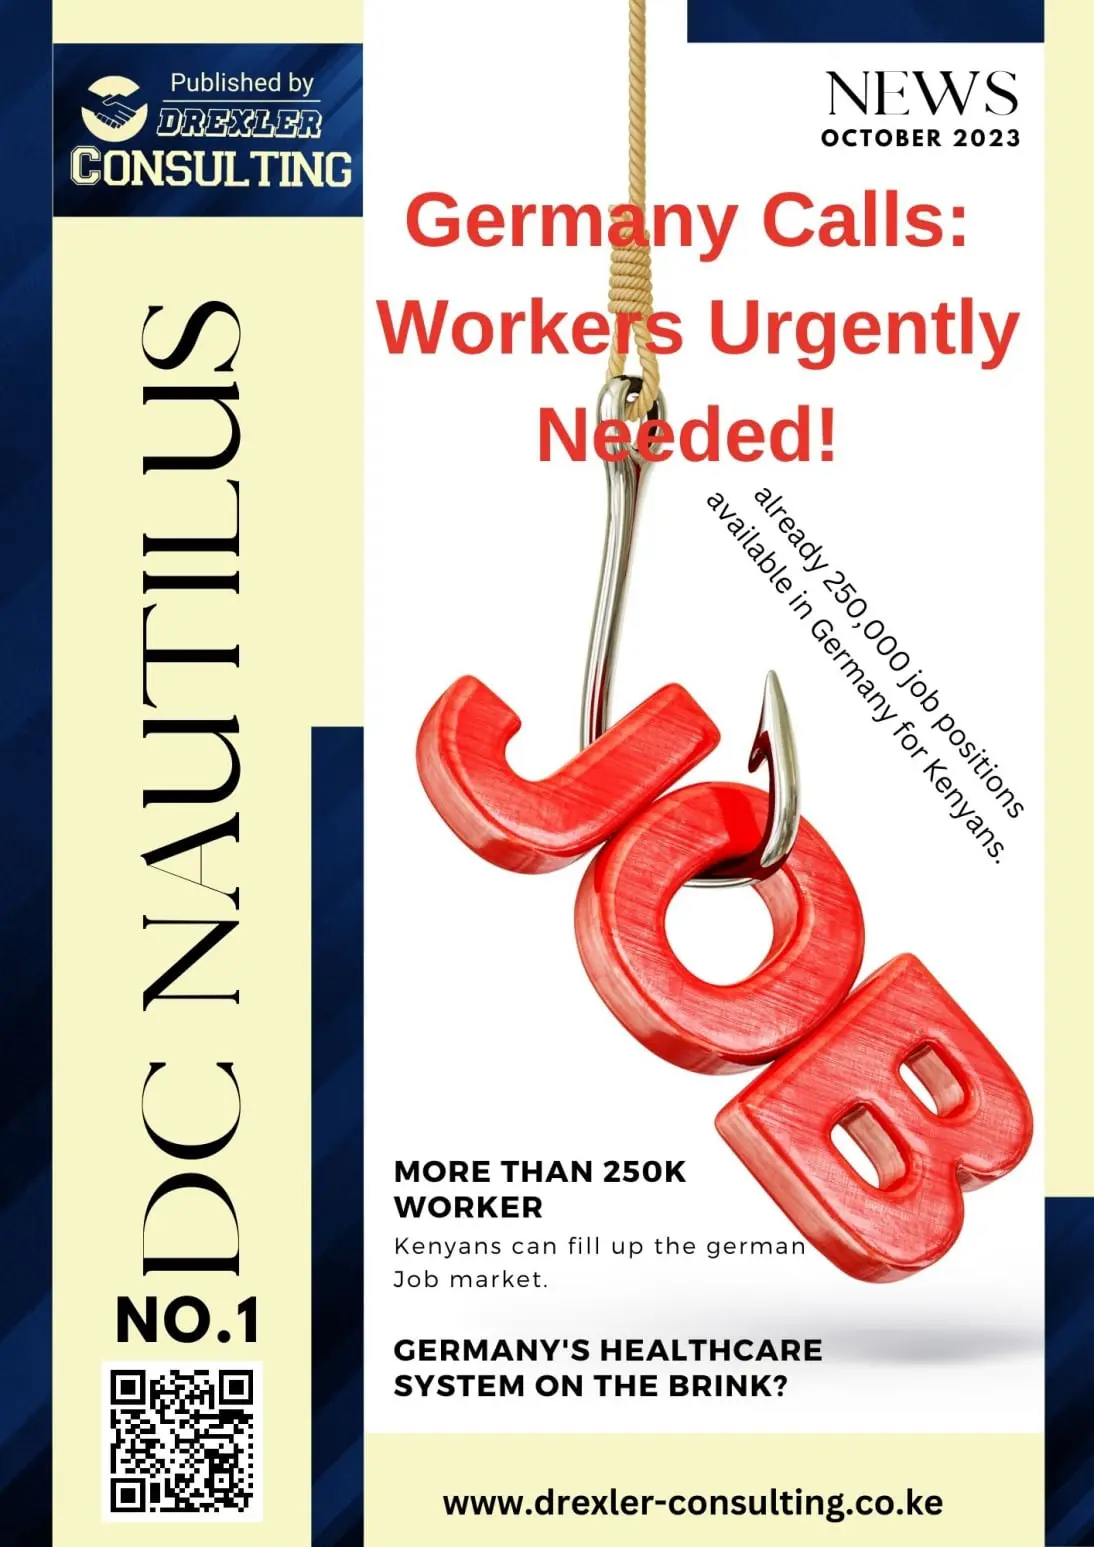 The job magazin from drexler consulting, DC Nautilus Jobs